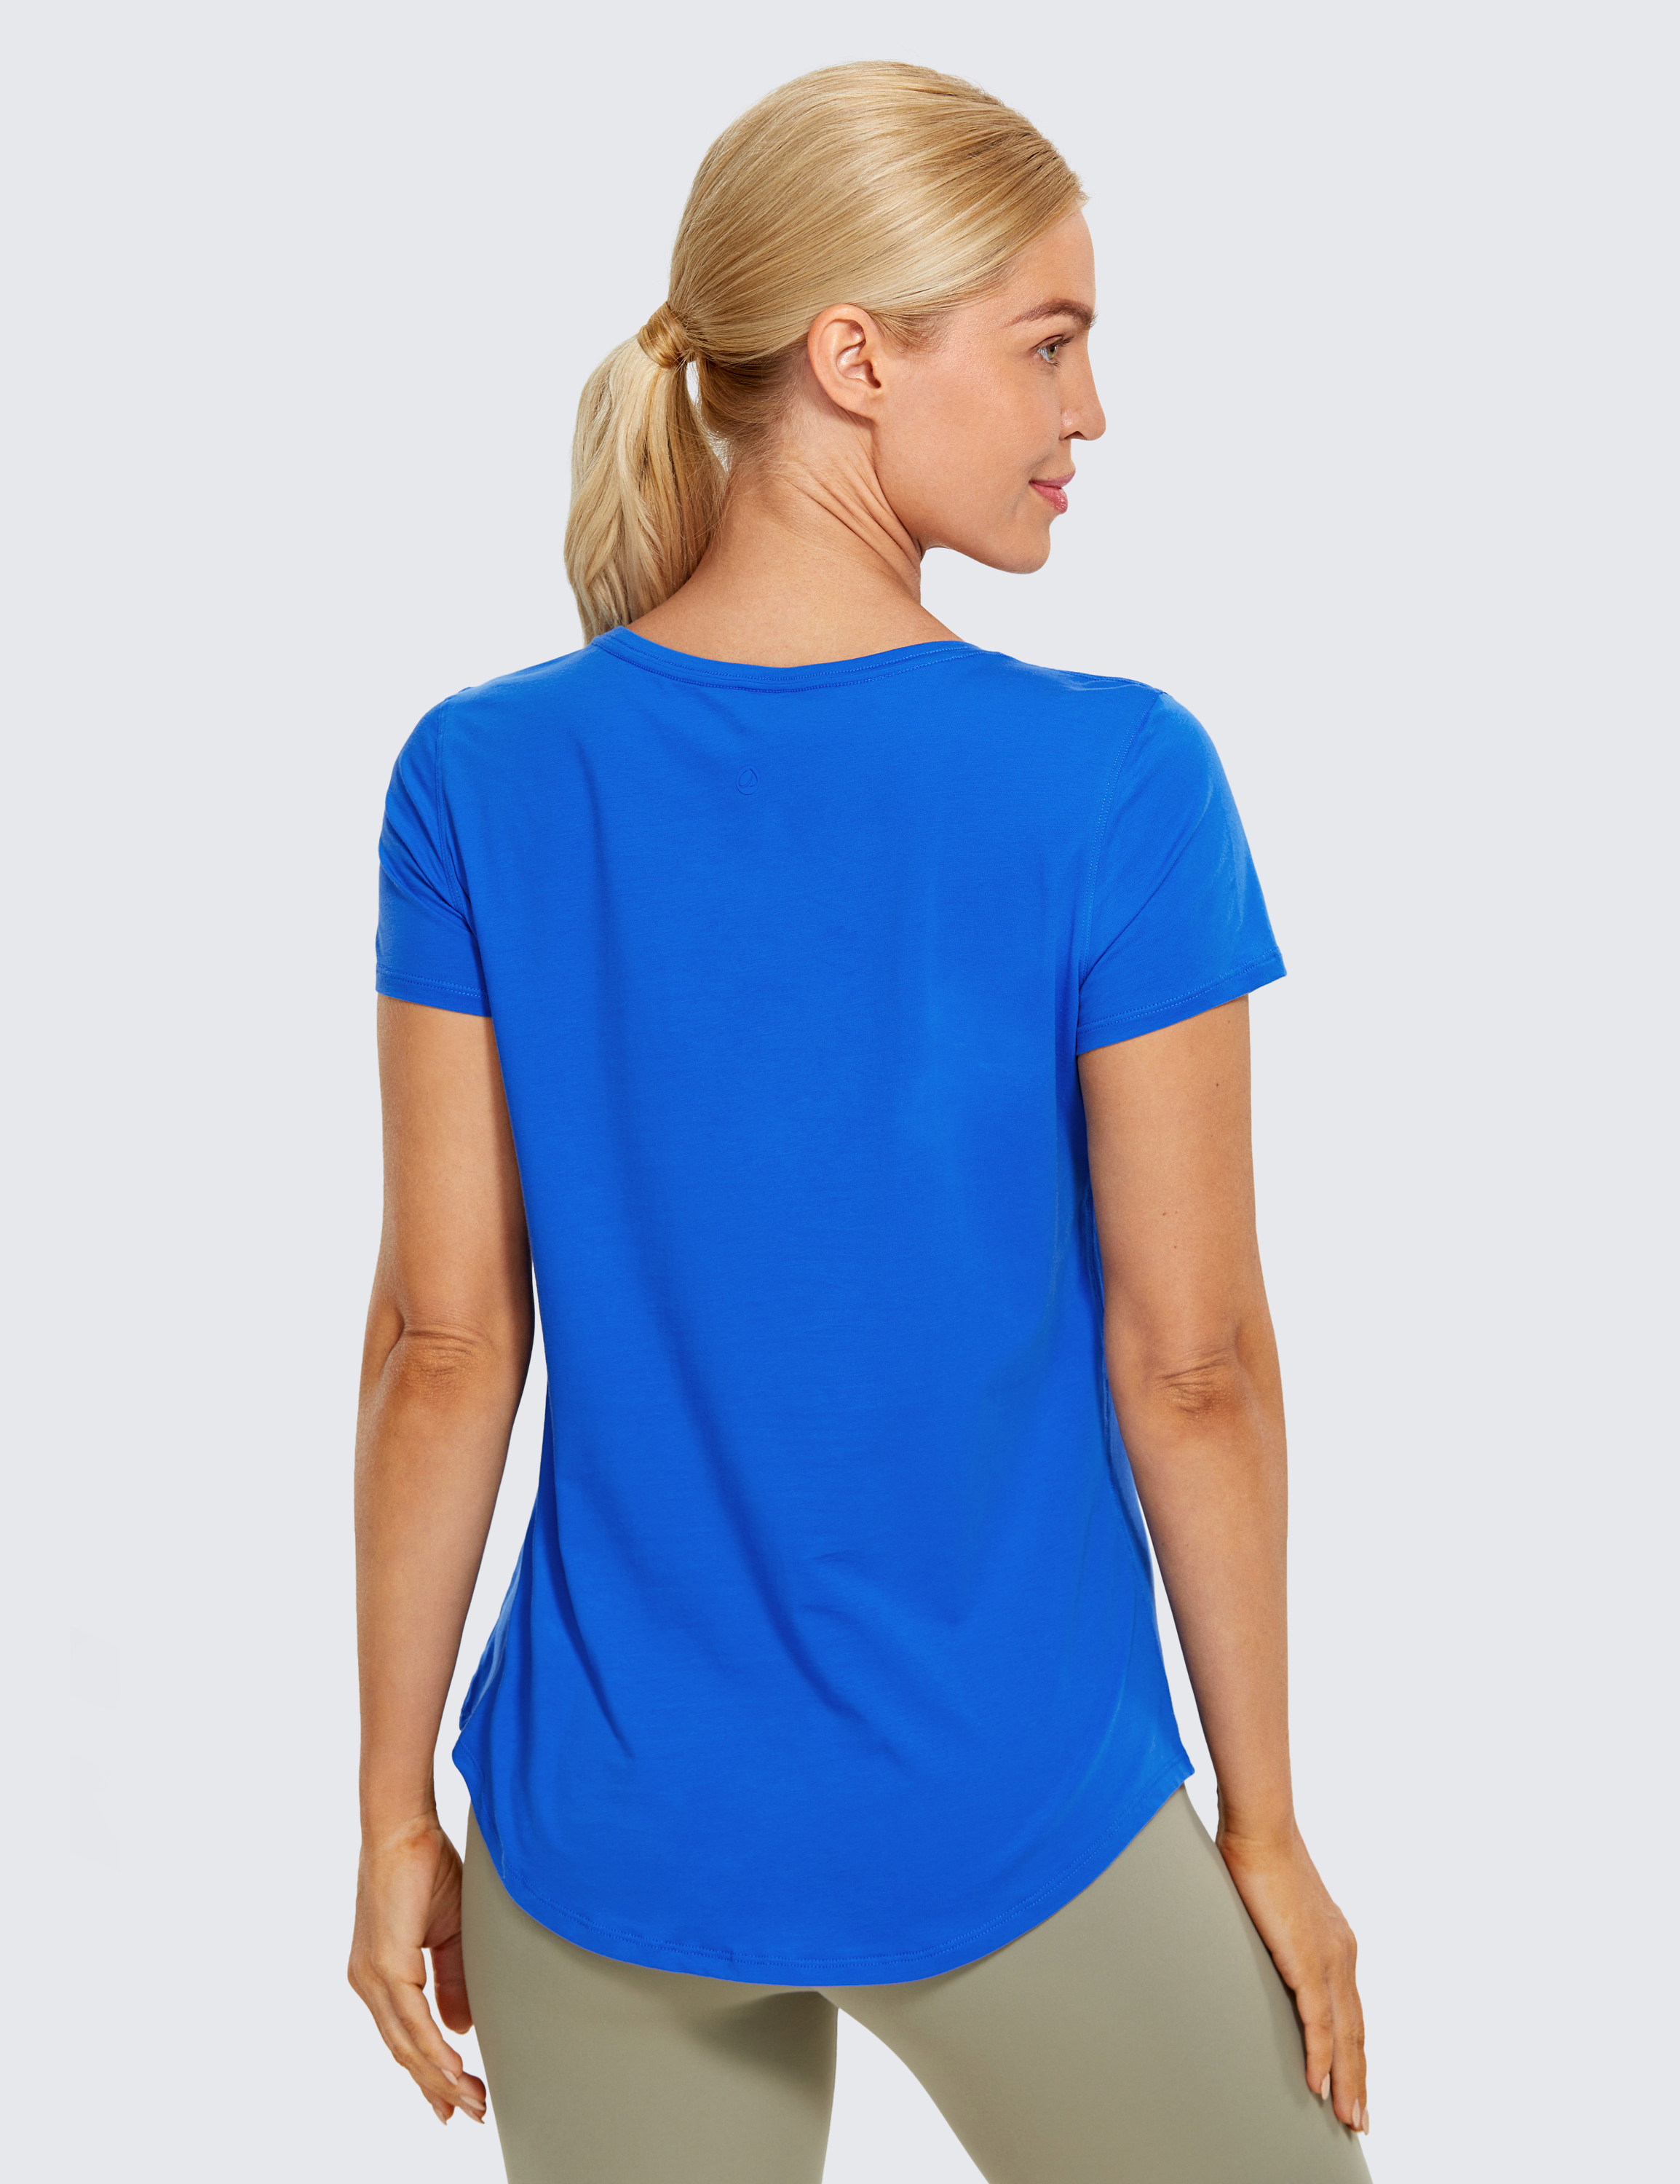 CRZ YOGA cRZ YOgA Womens Pima cotton Workout crop Tops Short Sleeve Yoga  Shirts casual Athletic Running T-Shirts Blue color Medium